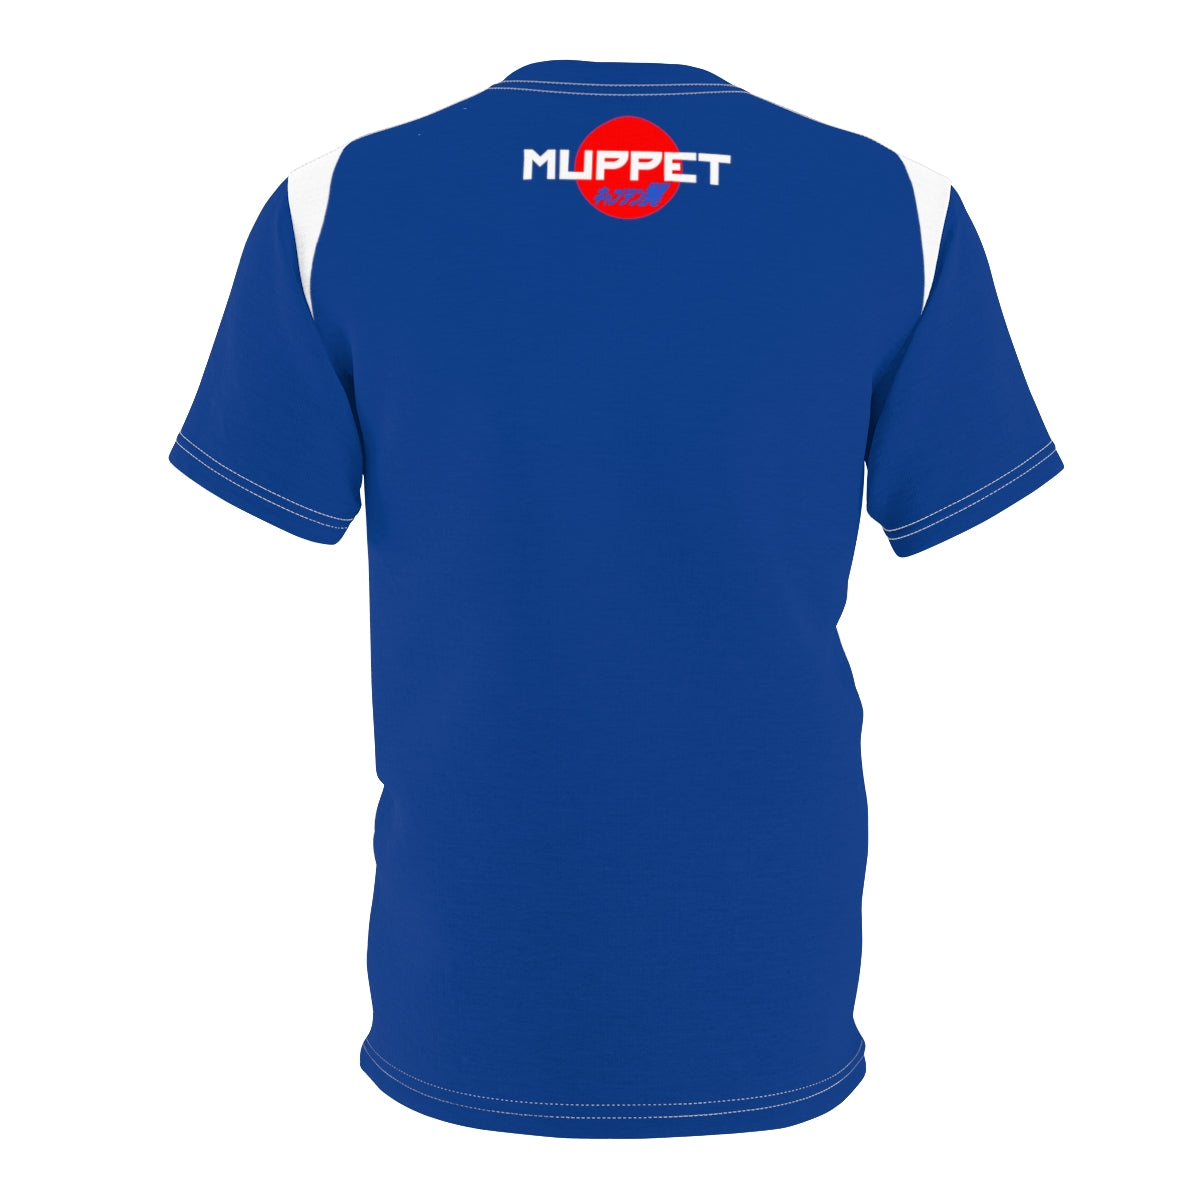 Captain Tsubasa - Muppet Team, Mark Lenders | Cosplay fashion t-shirt